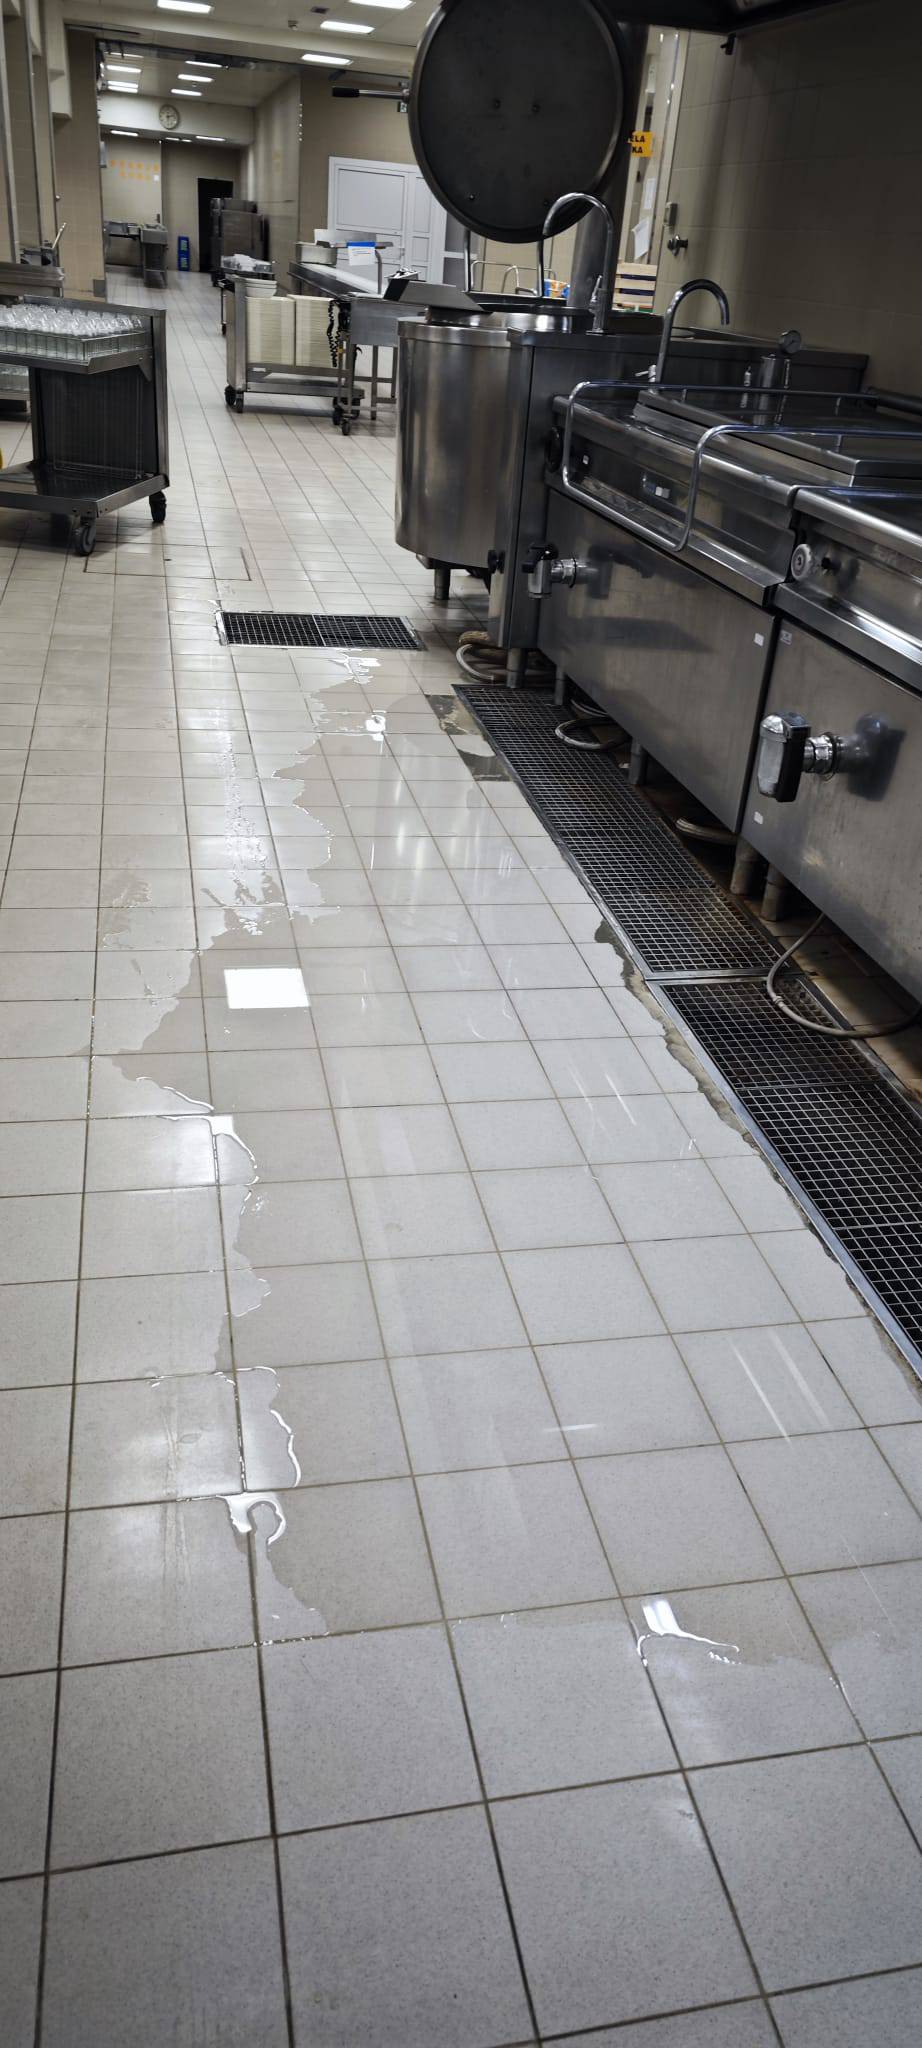 Fotografije kuhinje iz KBC -a Split: Zahrđale ručke, potrgani ormari, voda je po podu...